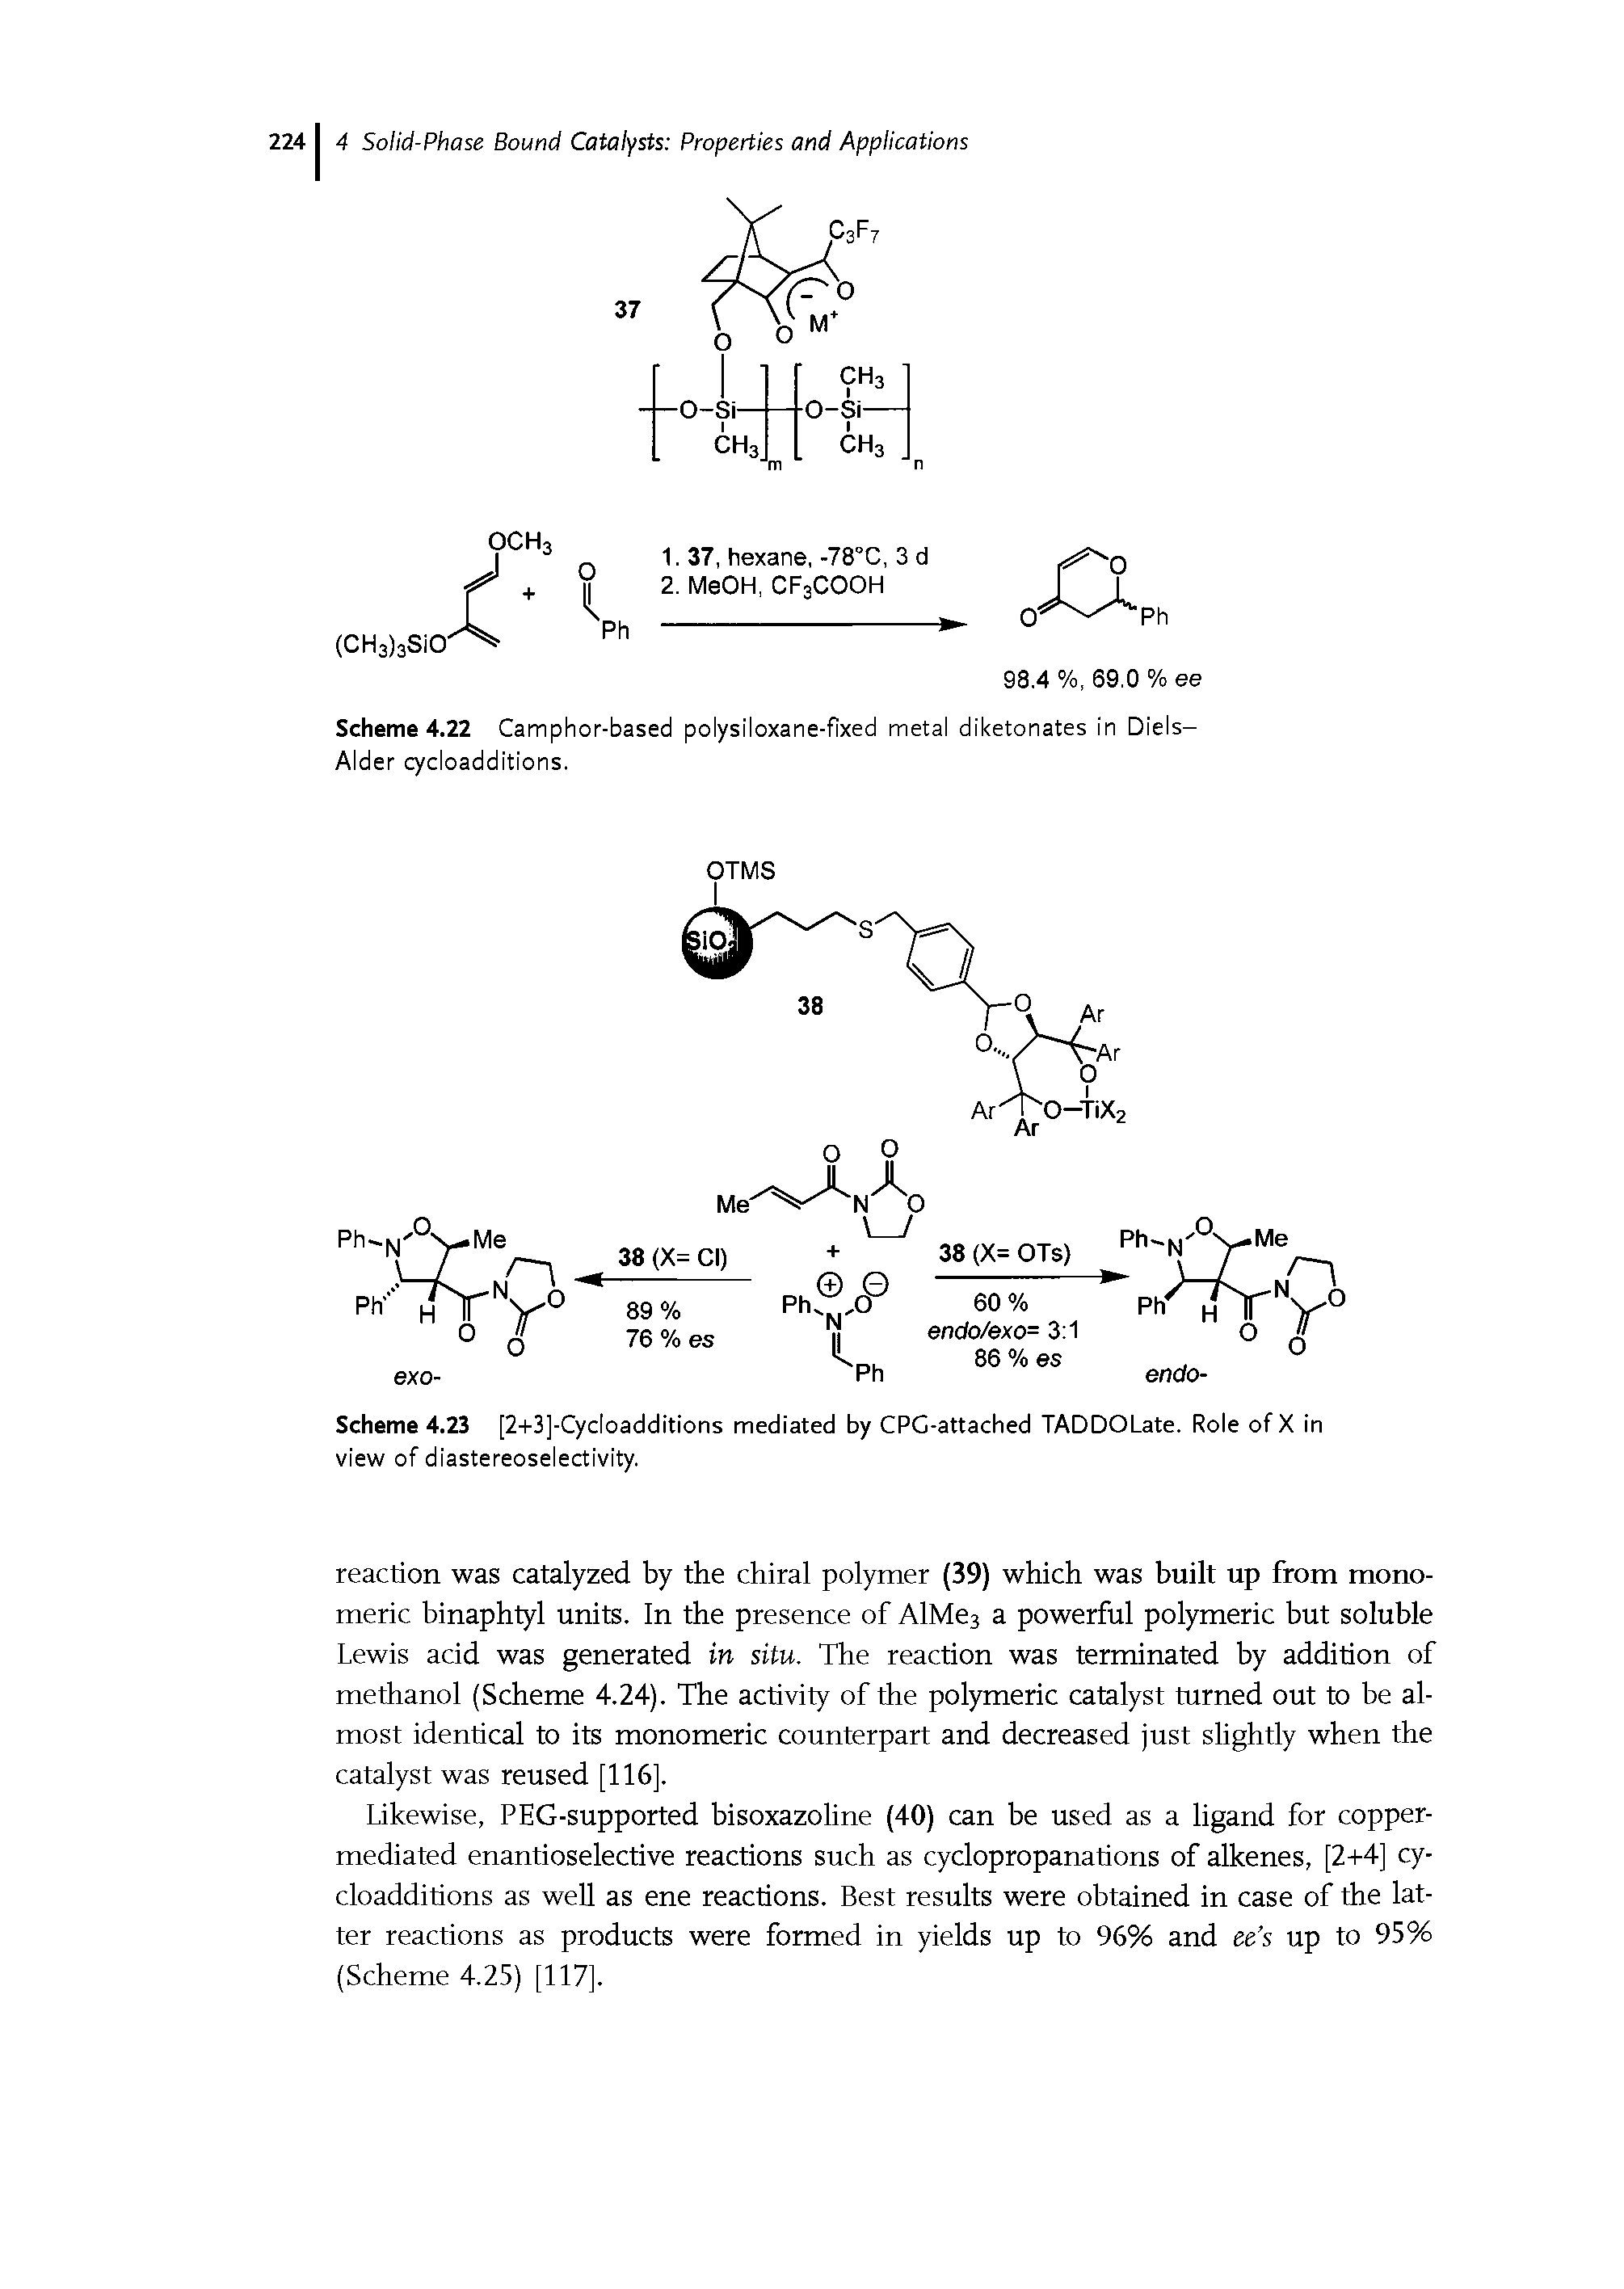 Scheme 4.22 Camphor-based polysiloxane-fixed metal diketonates in Diels-Alder cycloadditions.